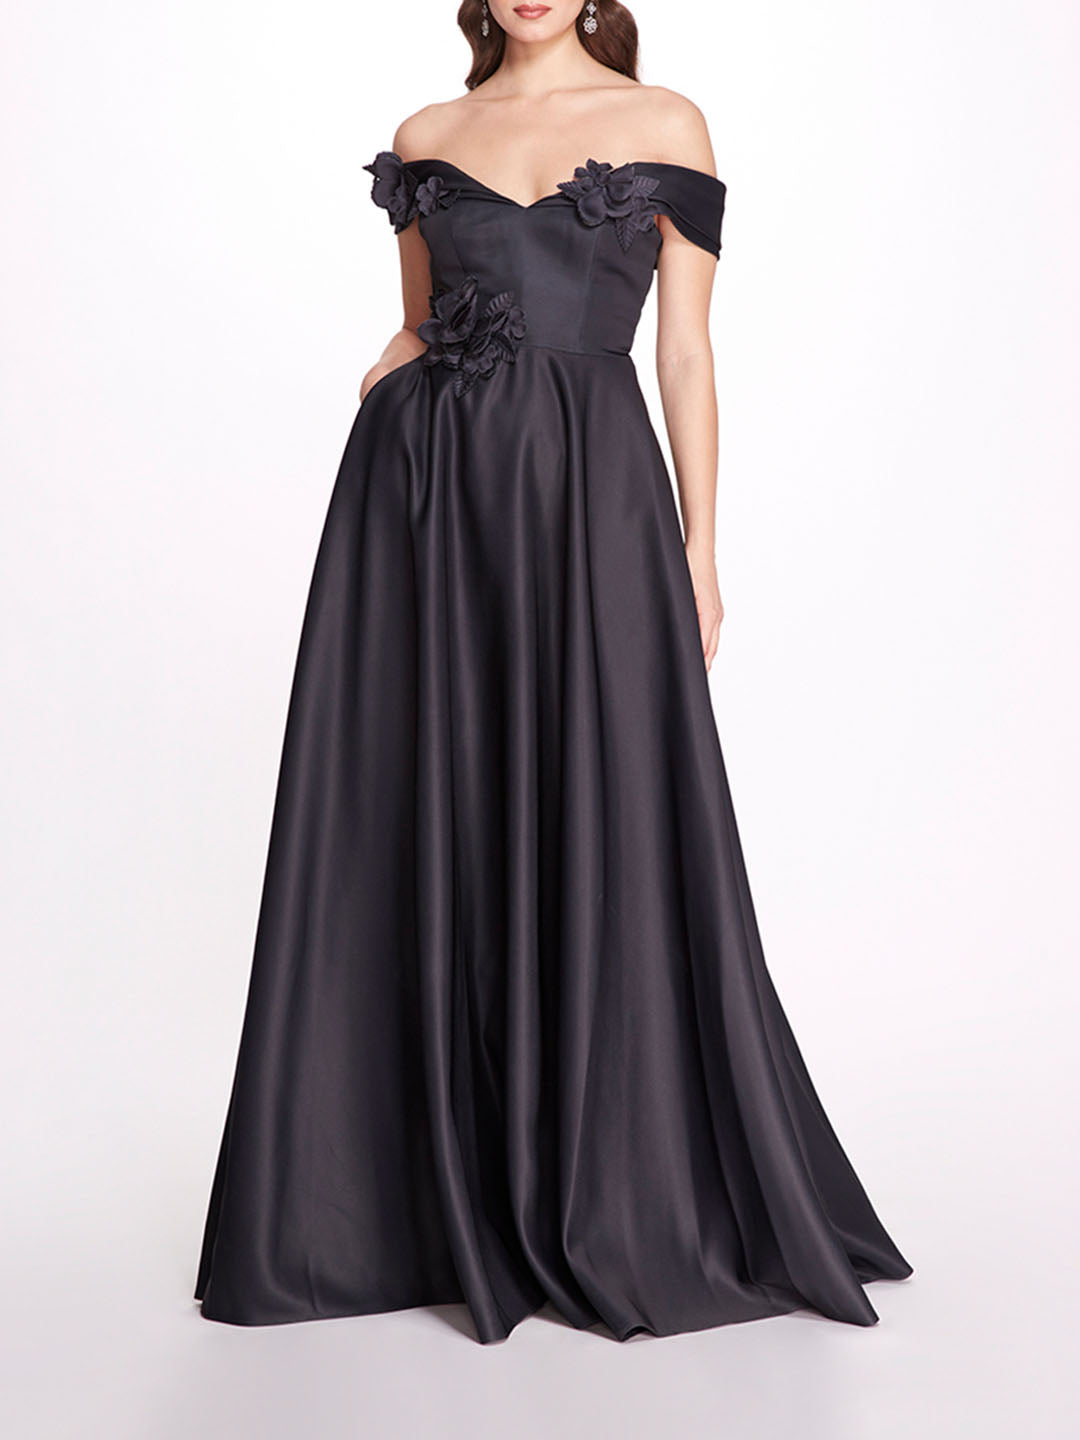 Duchess Satin Ball Gown With 3D Floral Applique | Marchesa